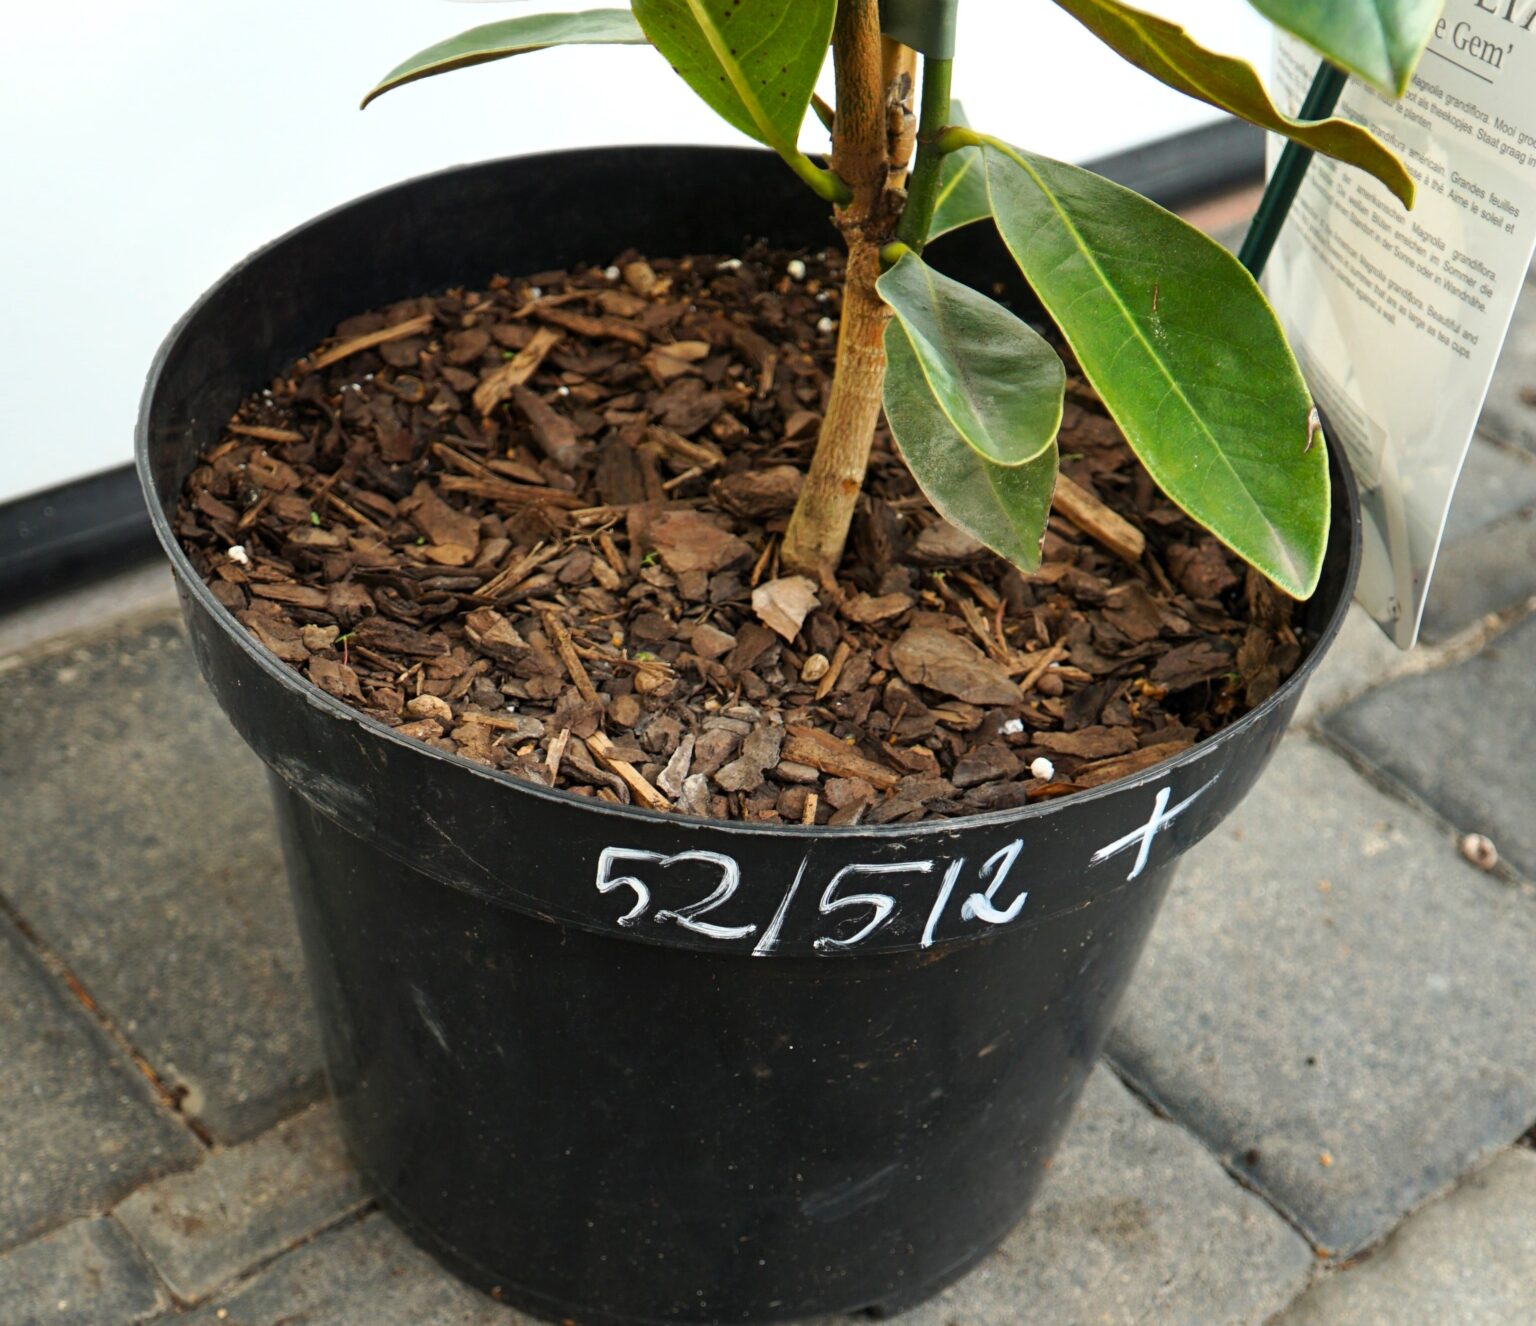 MAGNOLIA WIELKOKWIATOWA LITTLE GEM Magnolia grandiflora